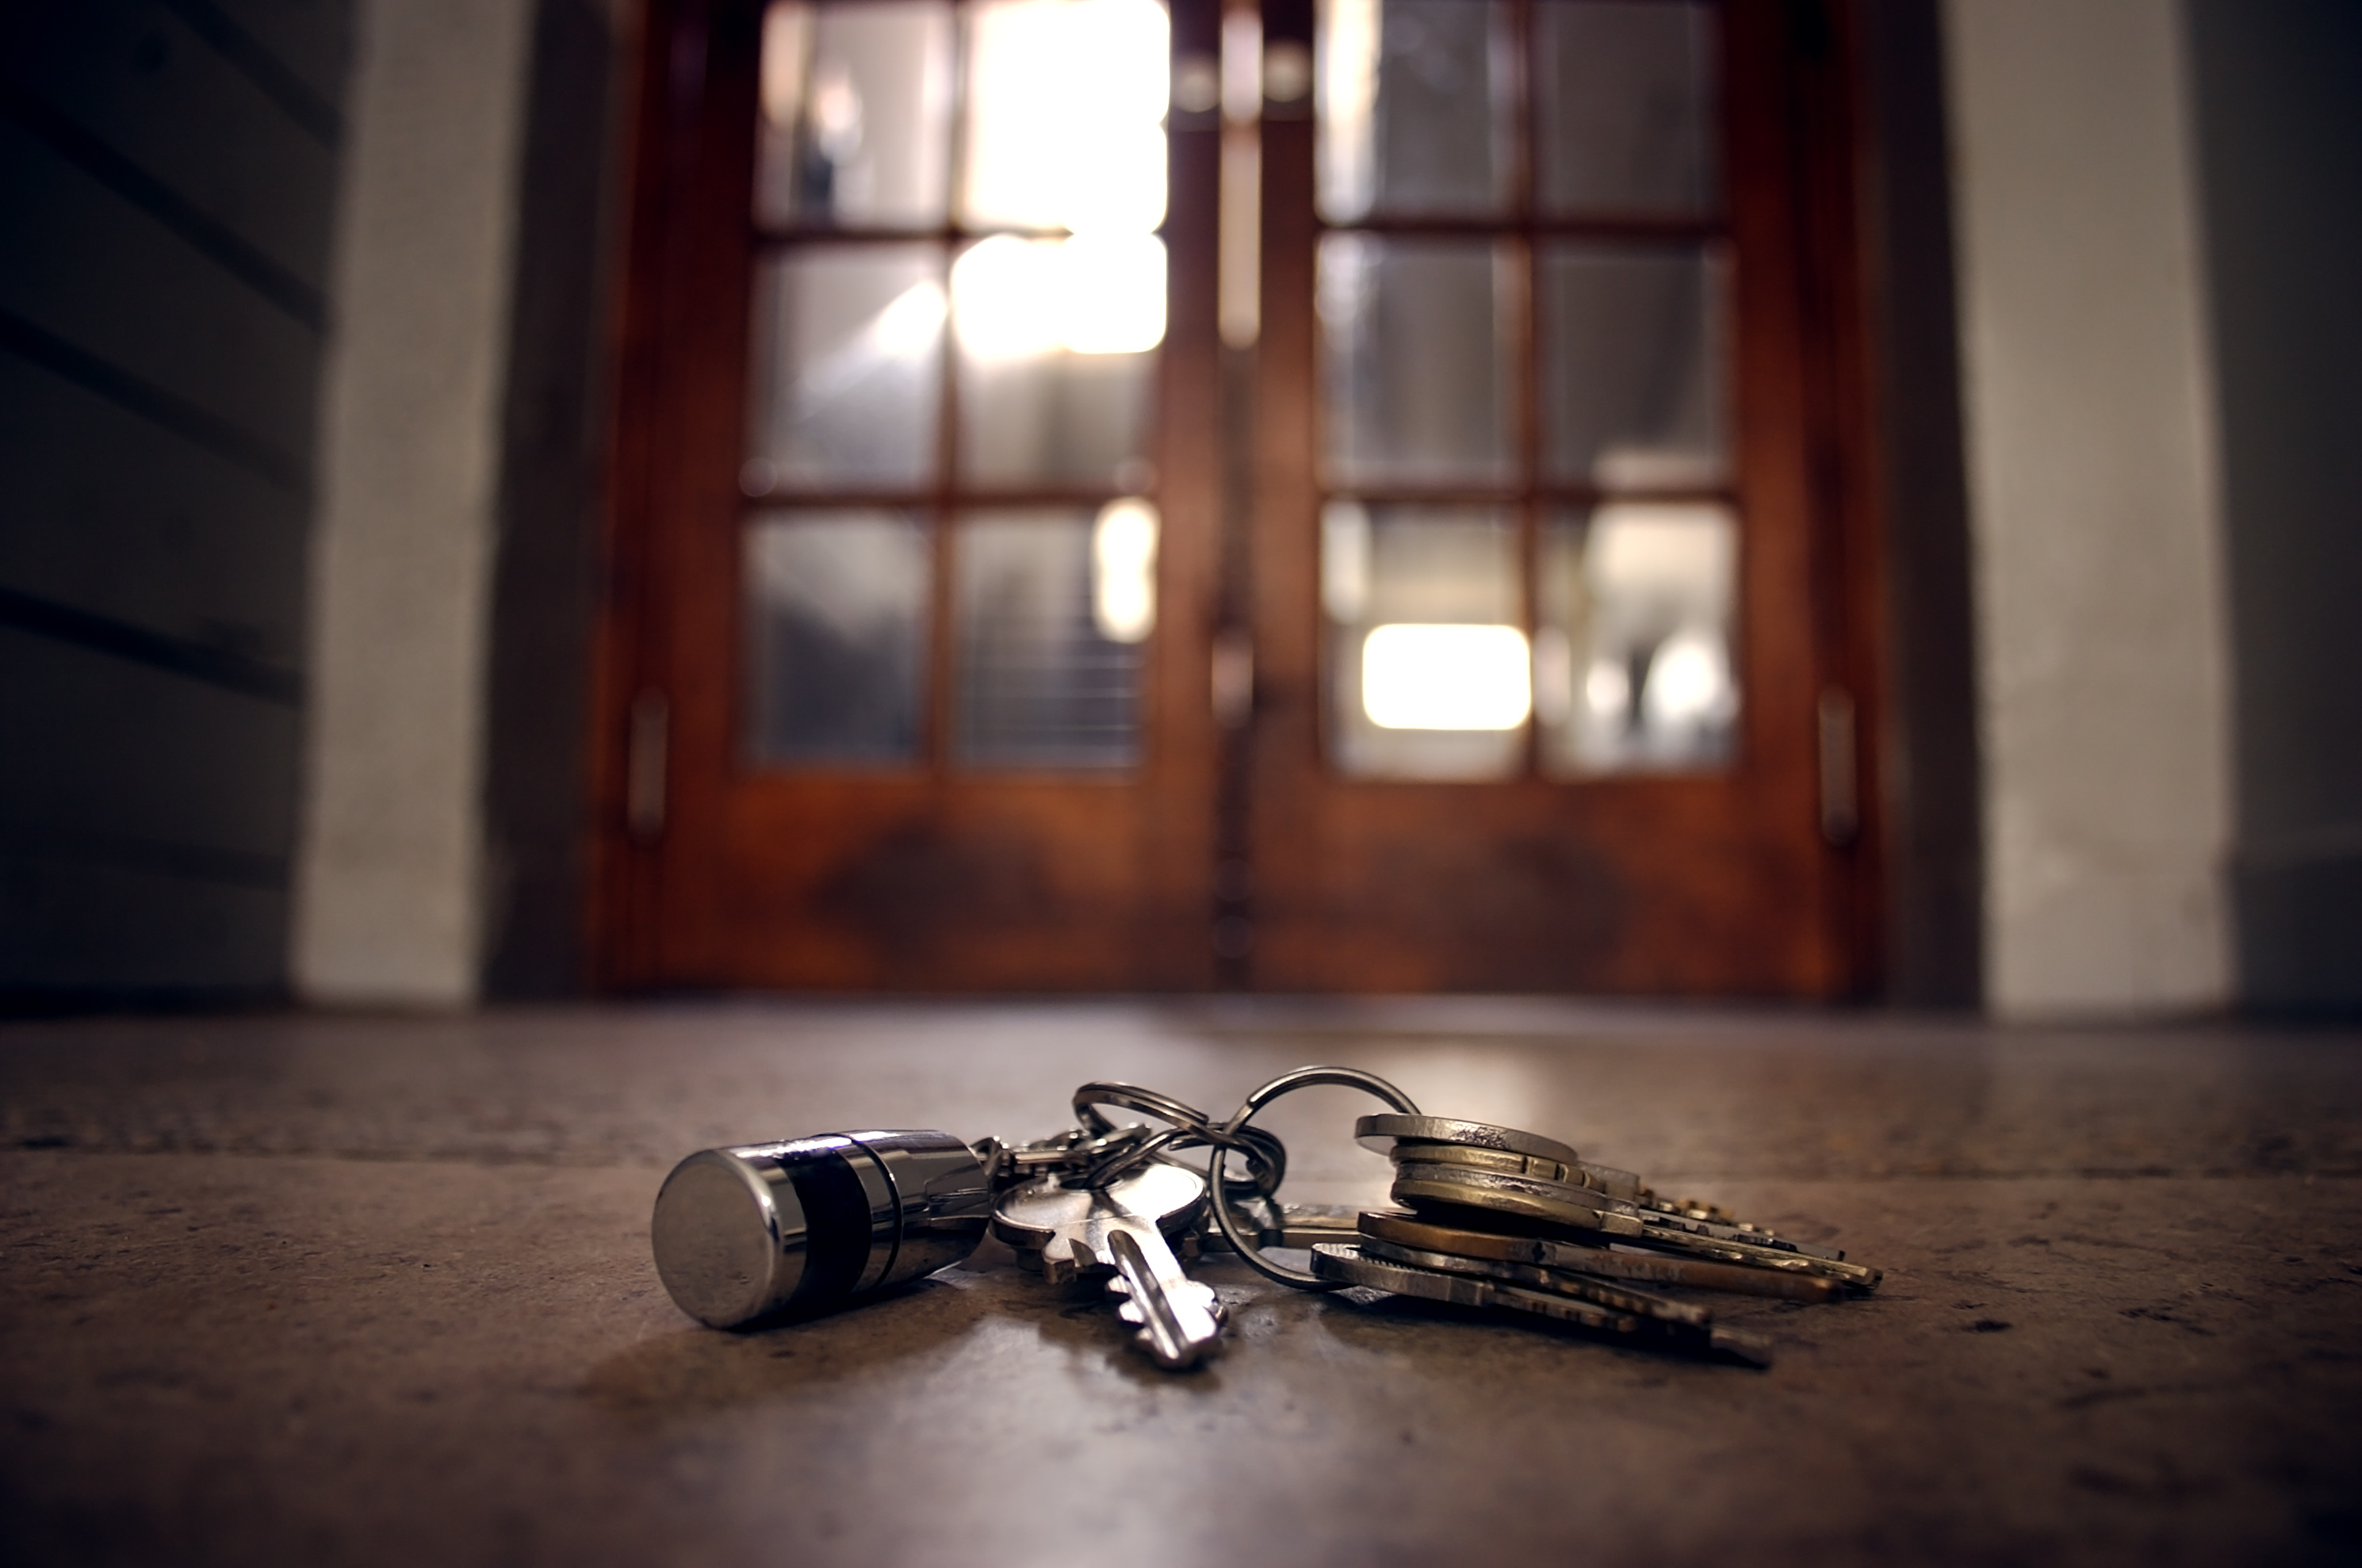 Keys on the ground | Source: Shutterstock.com